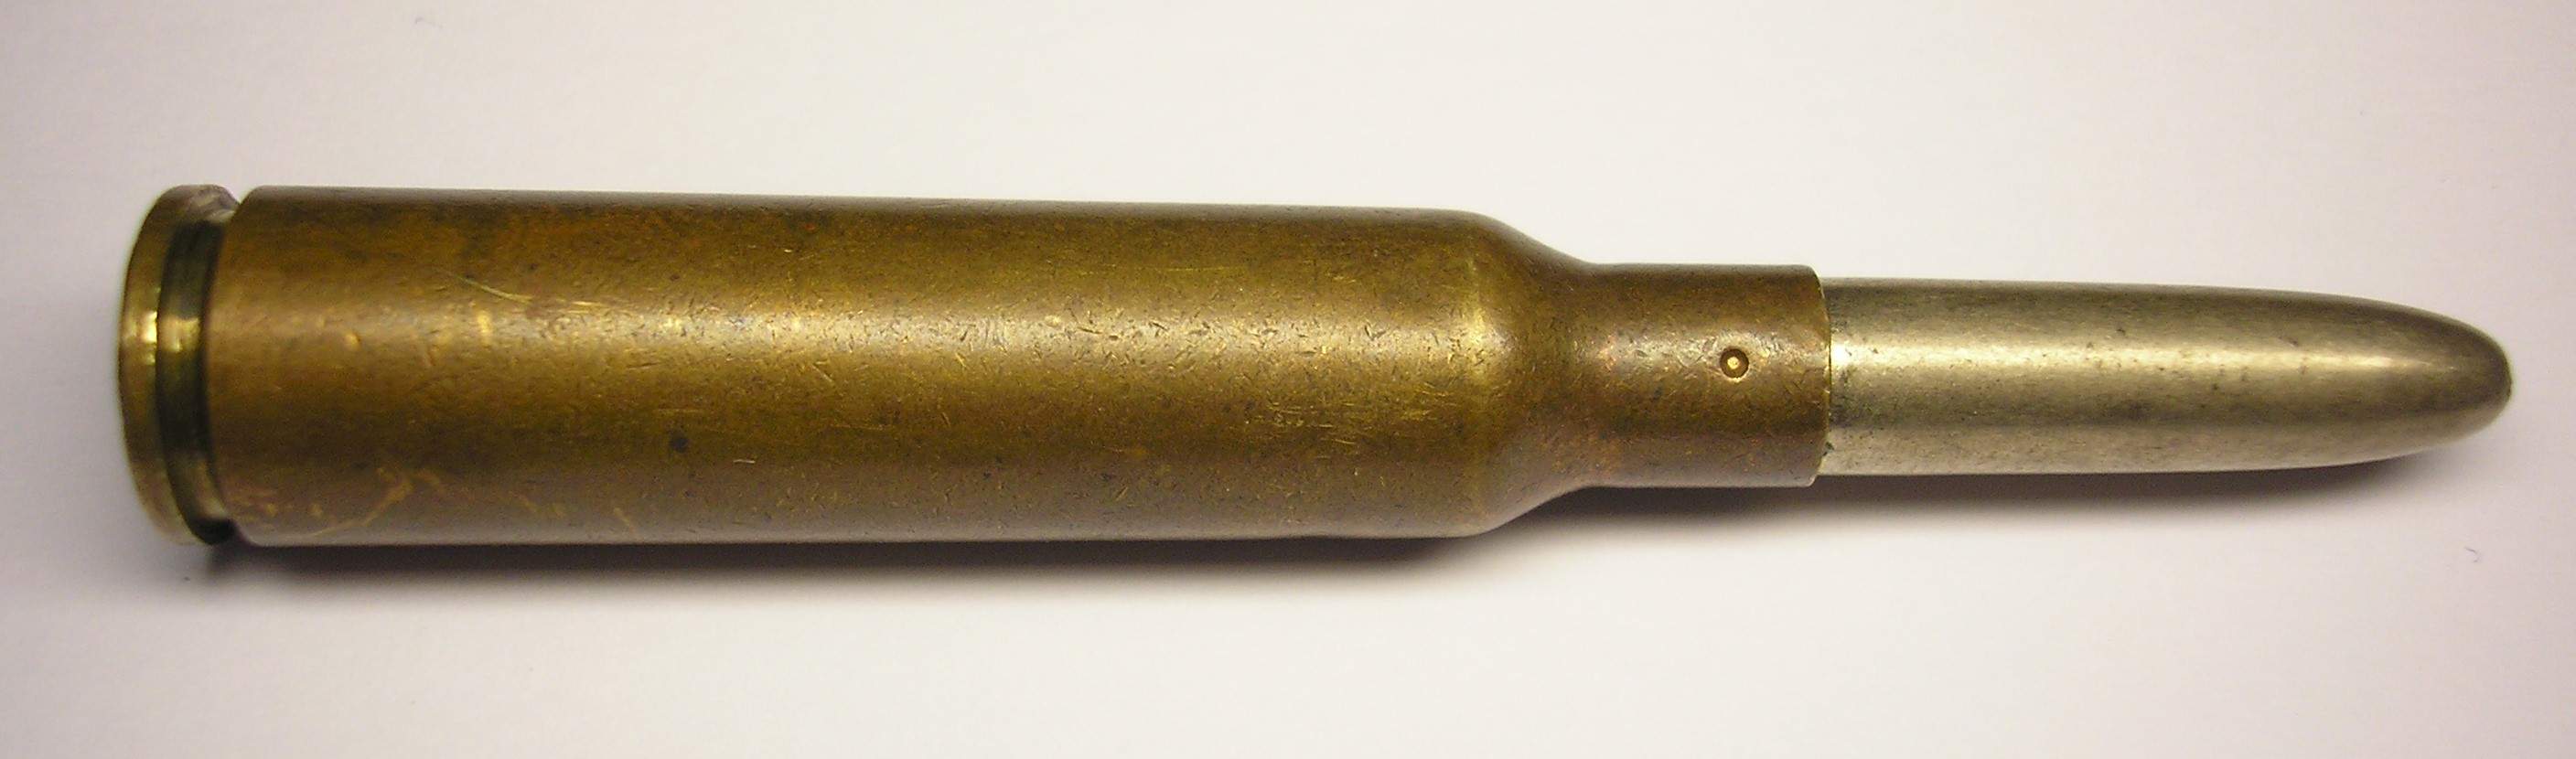 ./ammo/65x55/patroner/Patron-65x55-Raufoss-Helmantel-1925-1.JPG